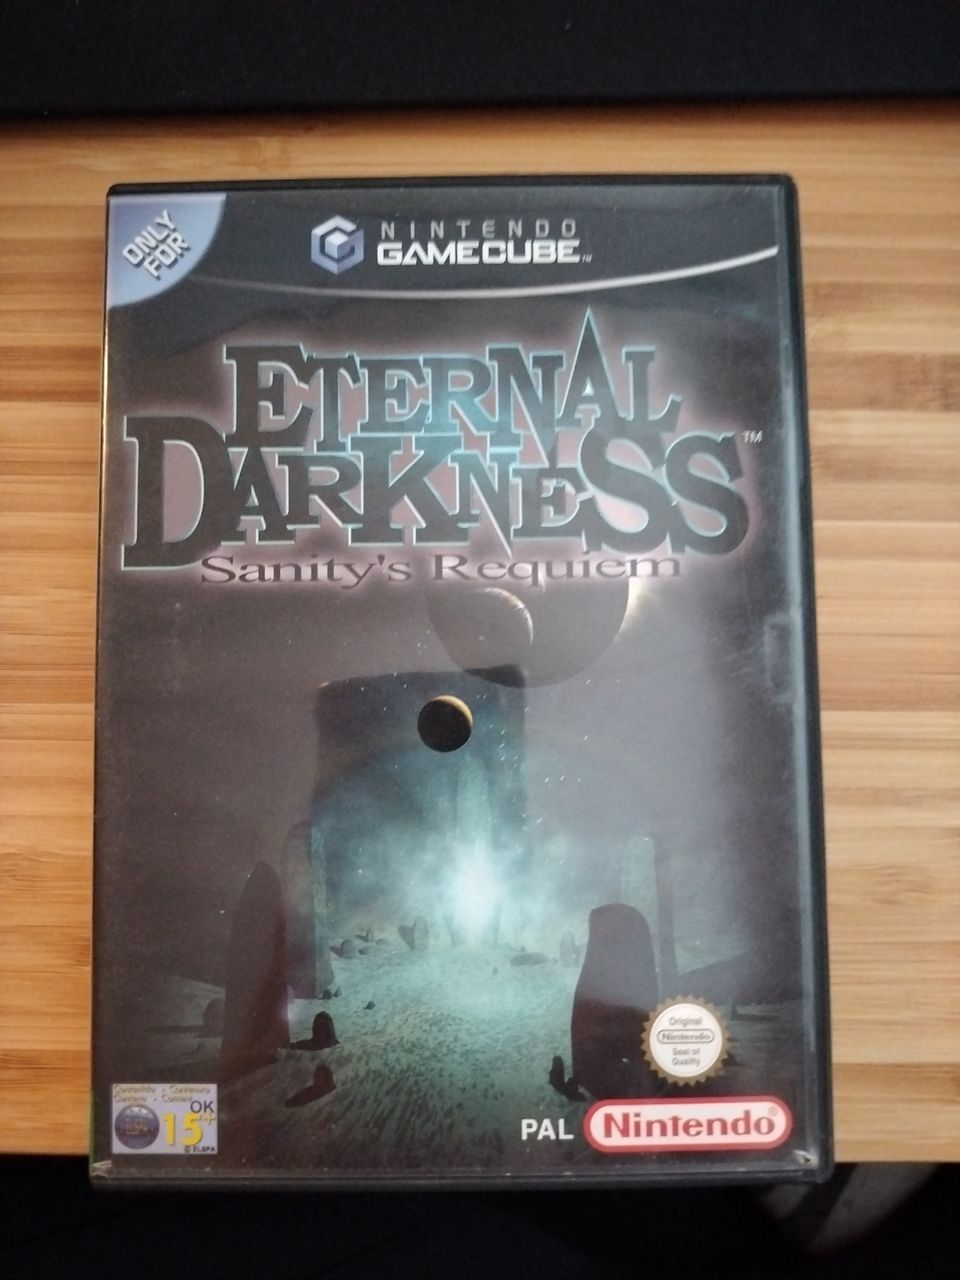 GameCube: Eternal Darkness